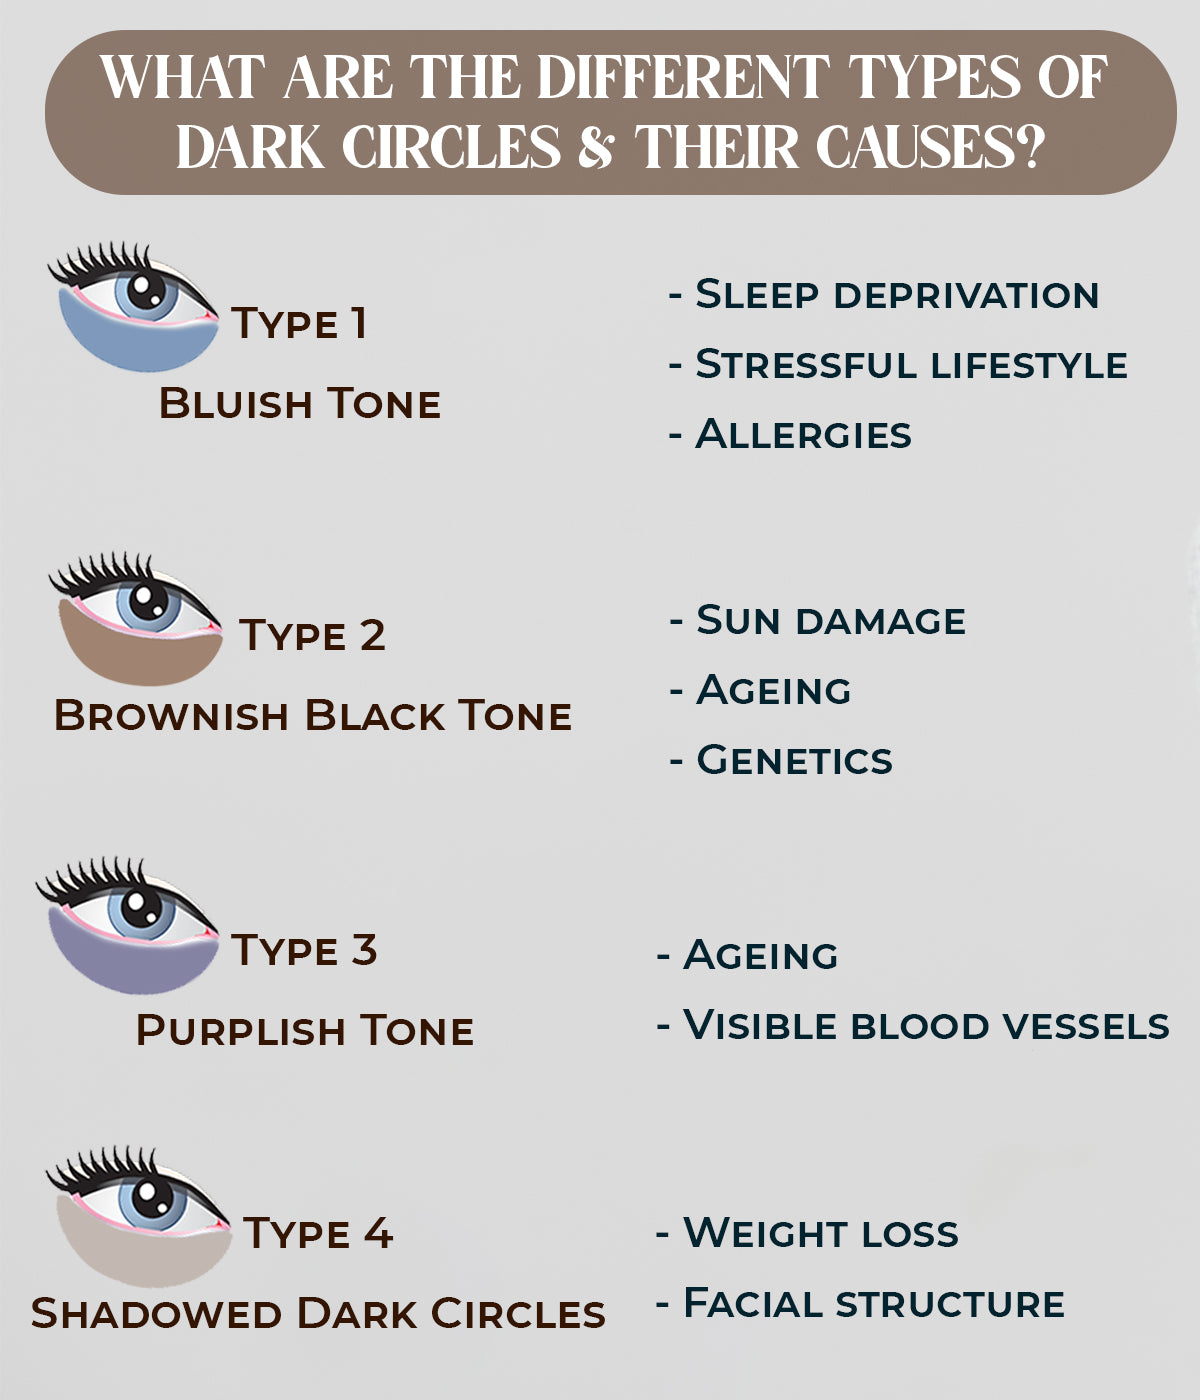 What Causes Dark Circles?